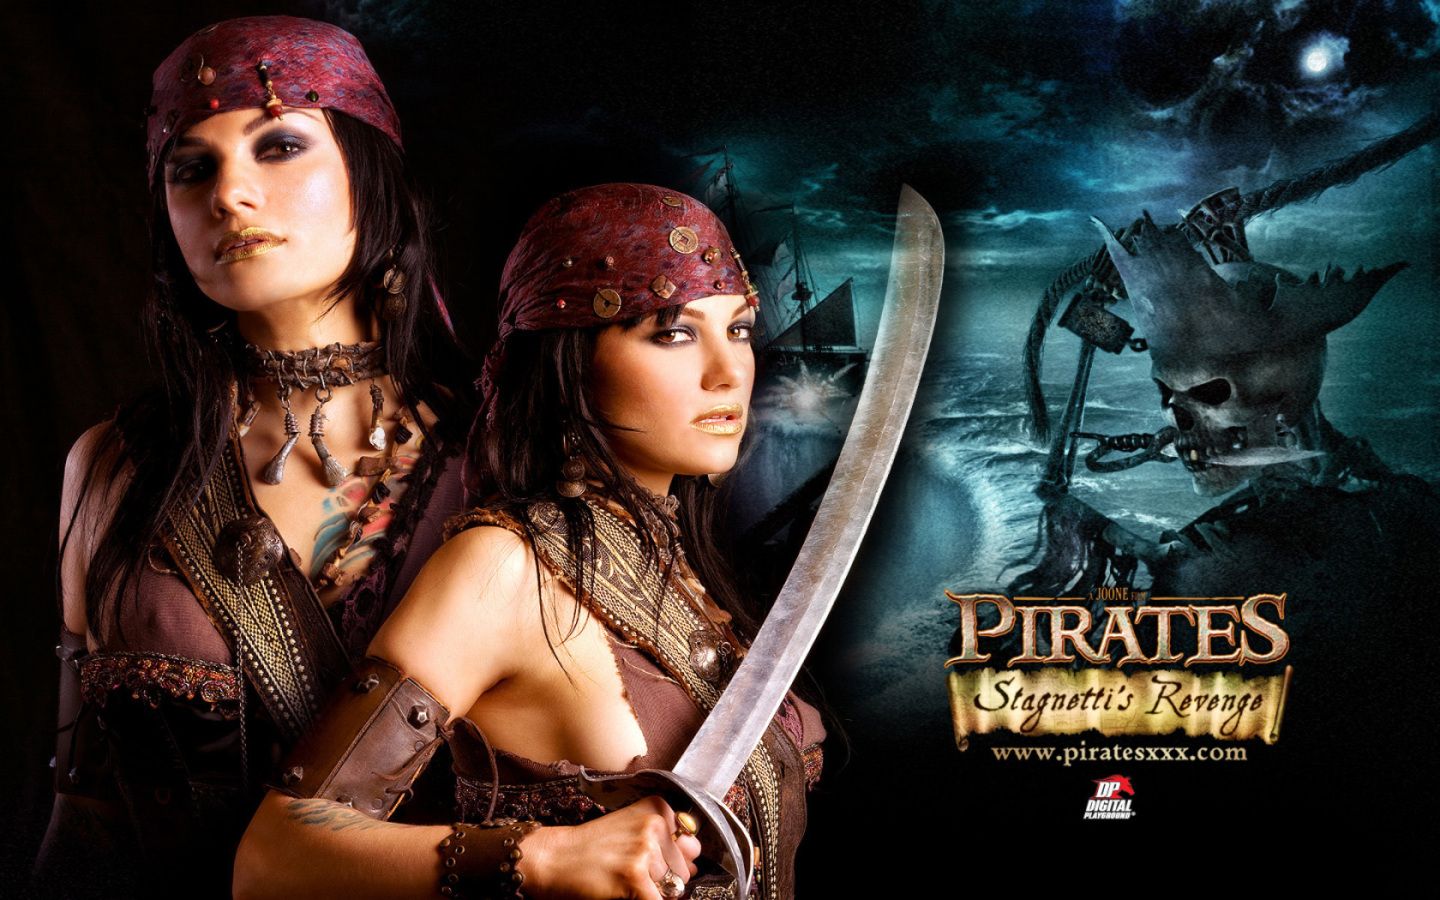 pirates full movie free download